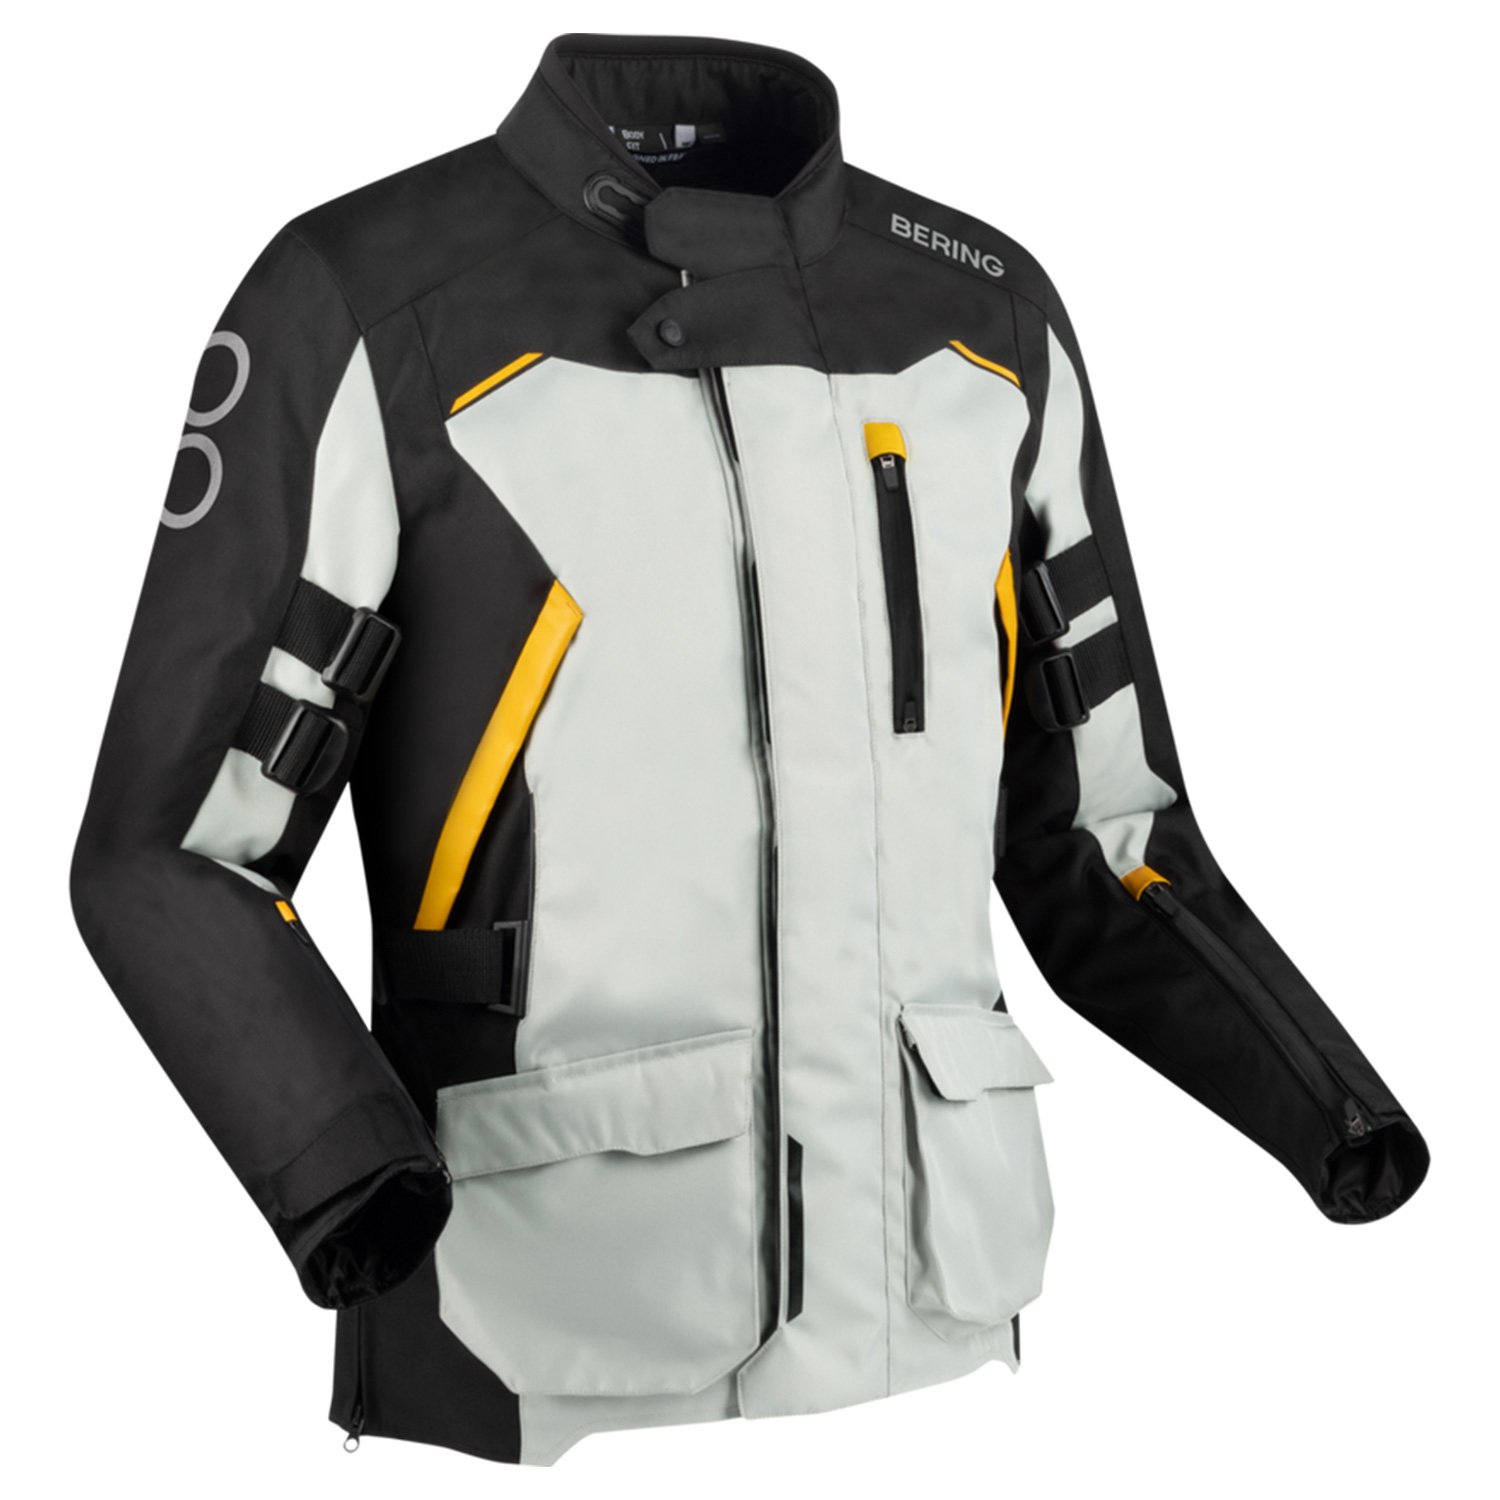 Image of Bering Zephyr Jacket Black Grey Yellow Size 3XL ID 3660815181126